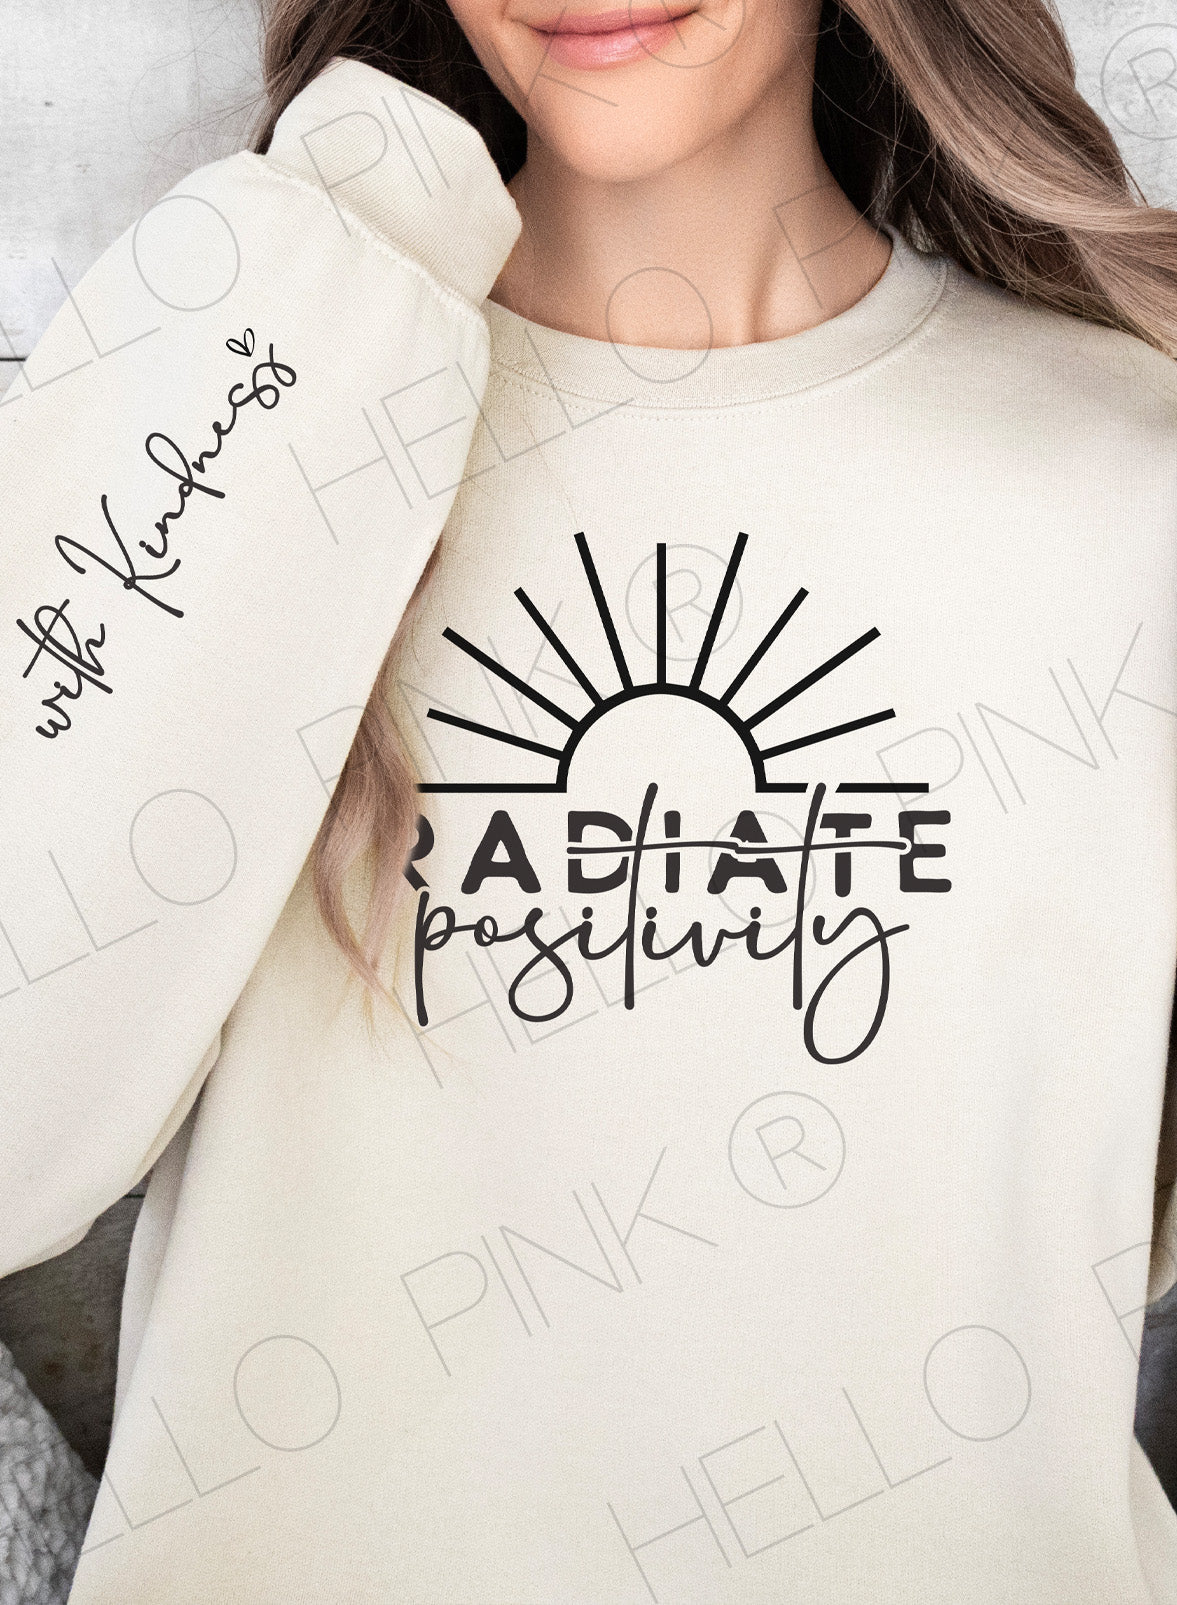 Radiate Positivity Accent Sleeve Sweatshirt